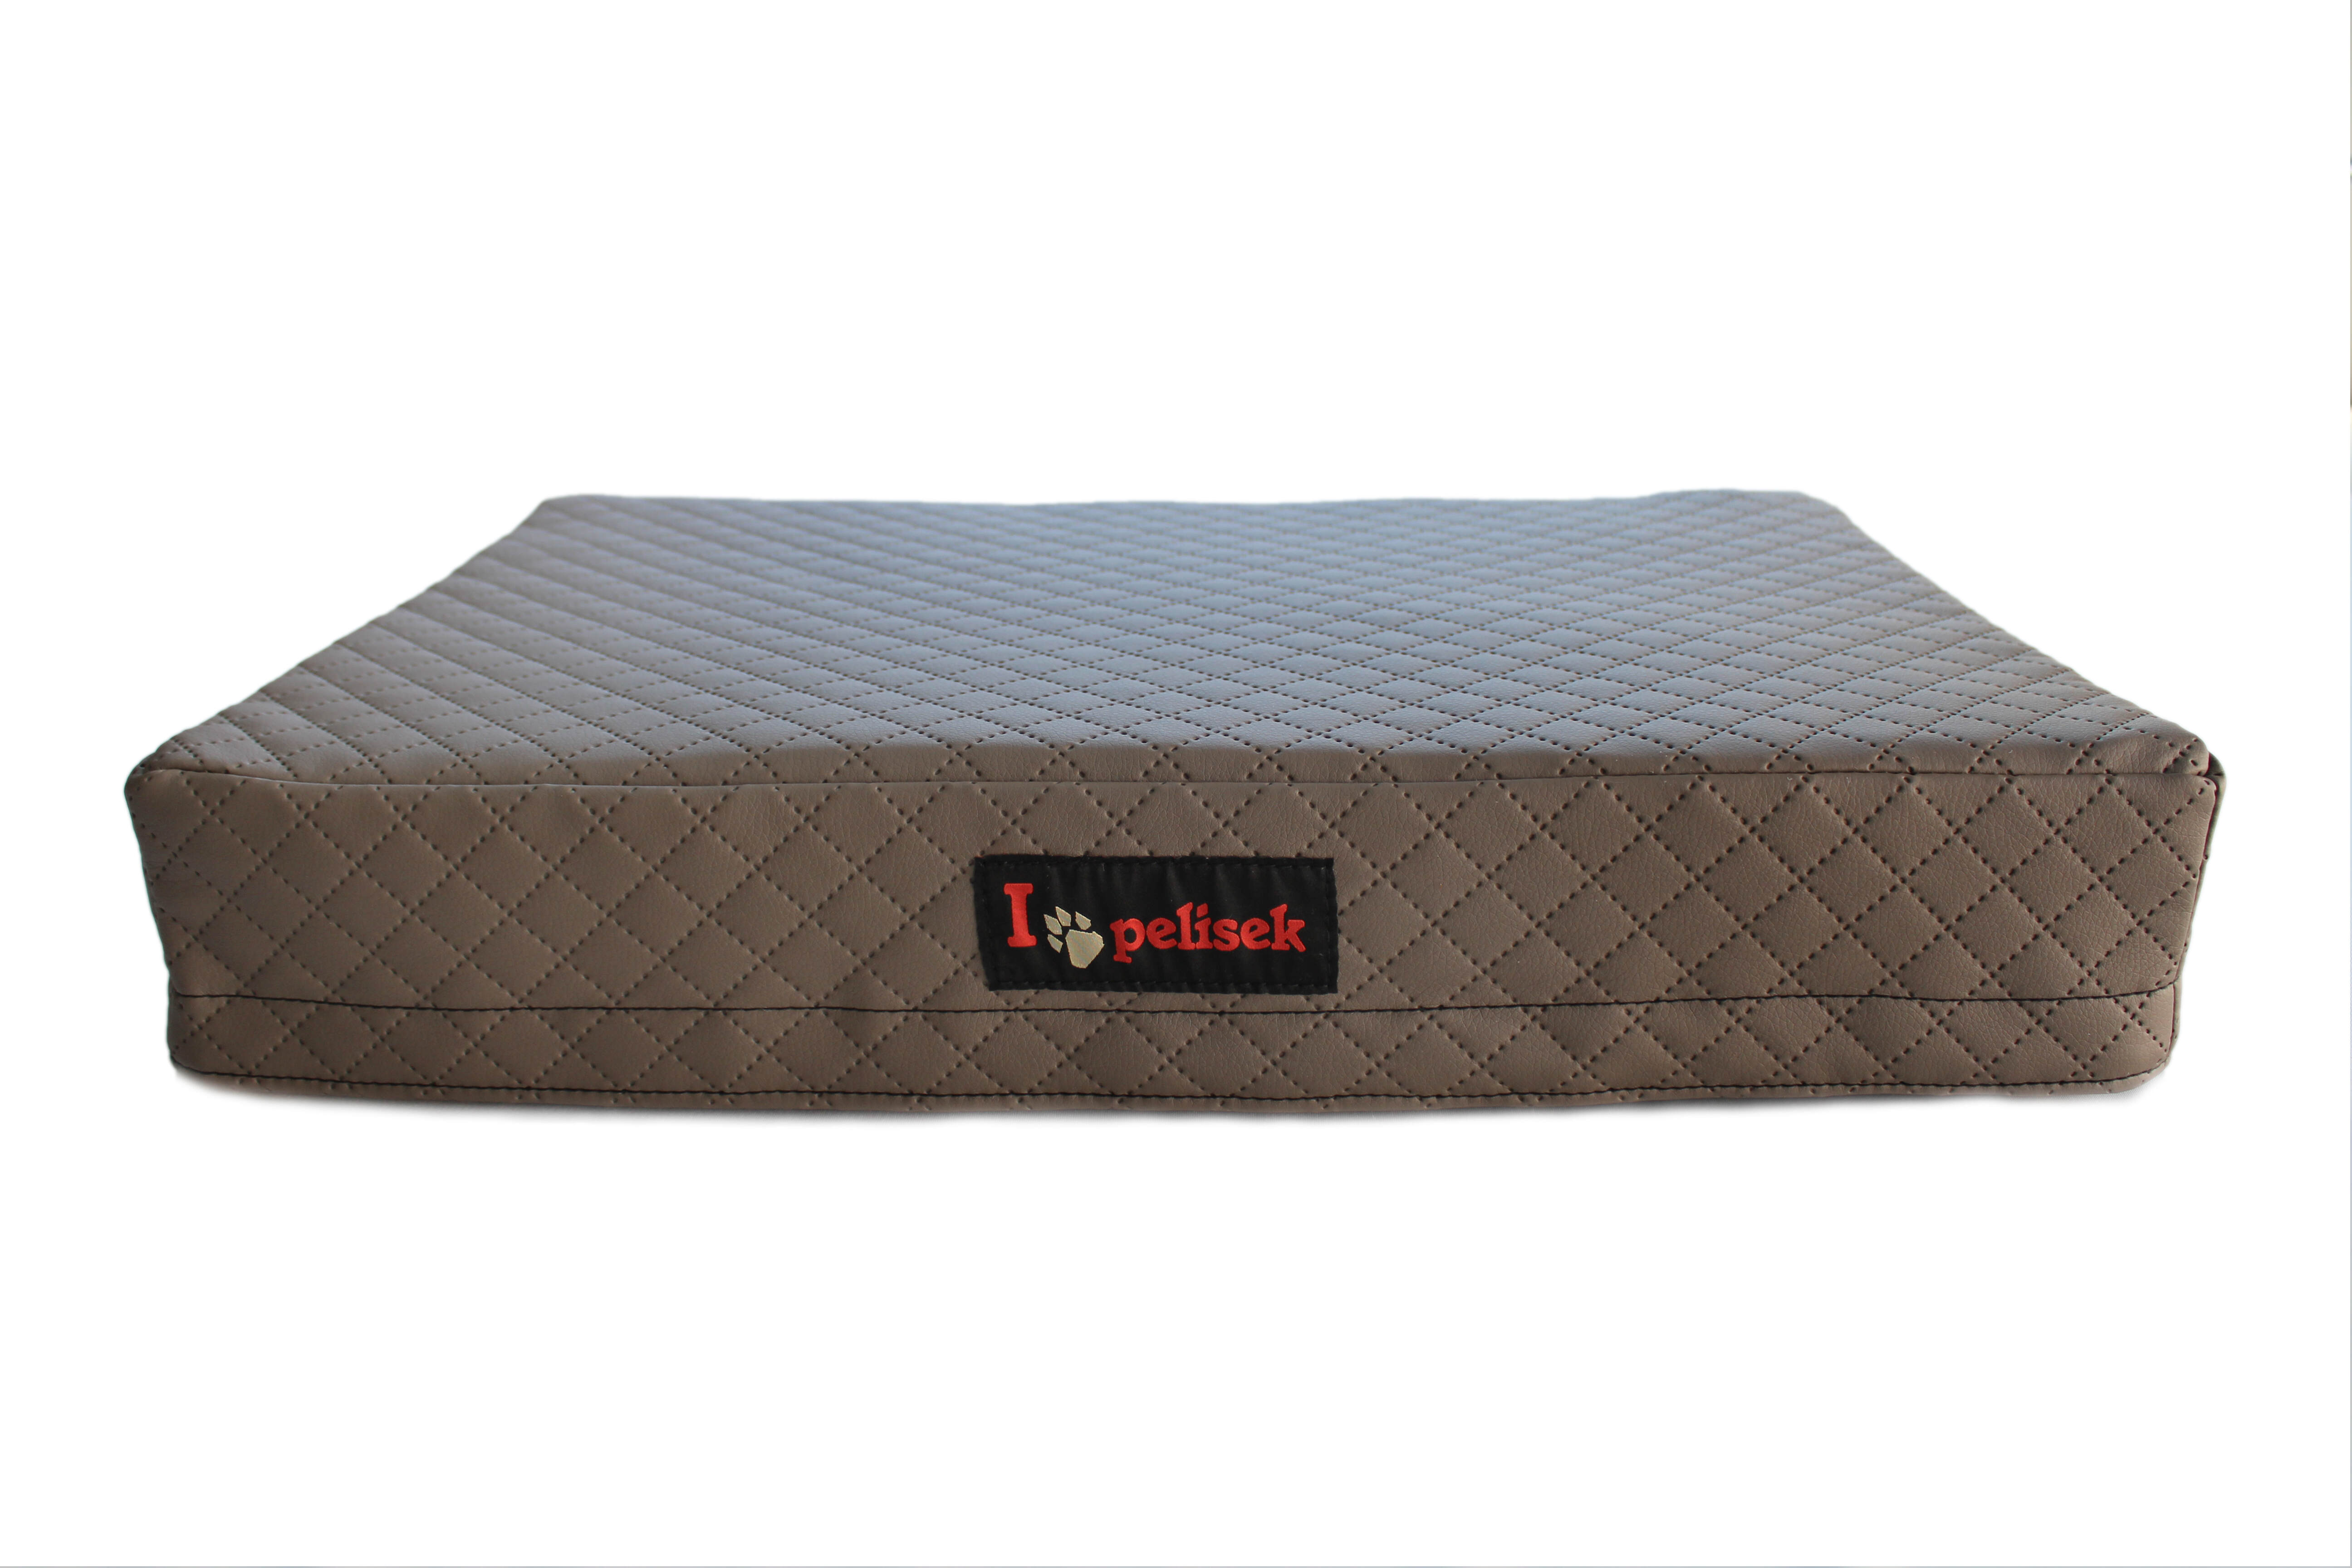 Orthopedic medical mattress for dog / cat I-pelisek ECO leather Grey